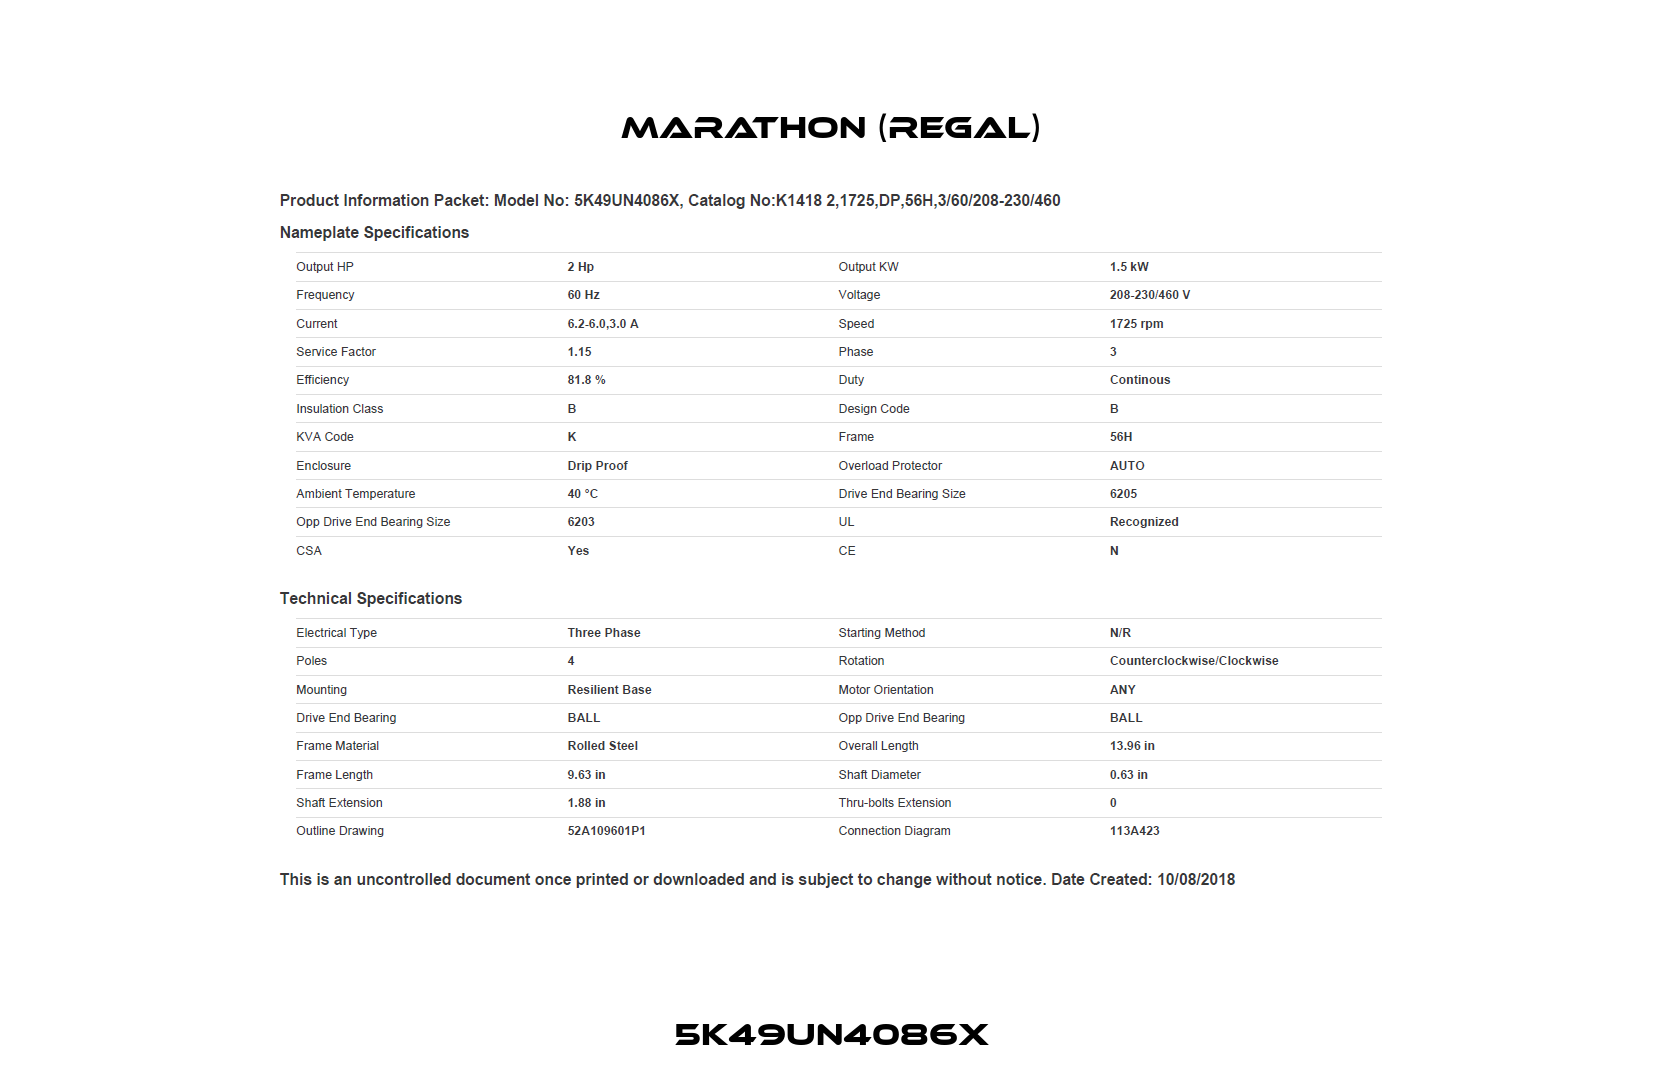 5K49UN4086X Marathon (Regal)